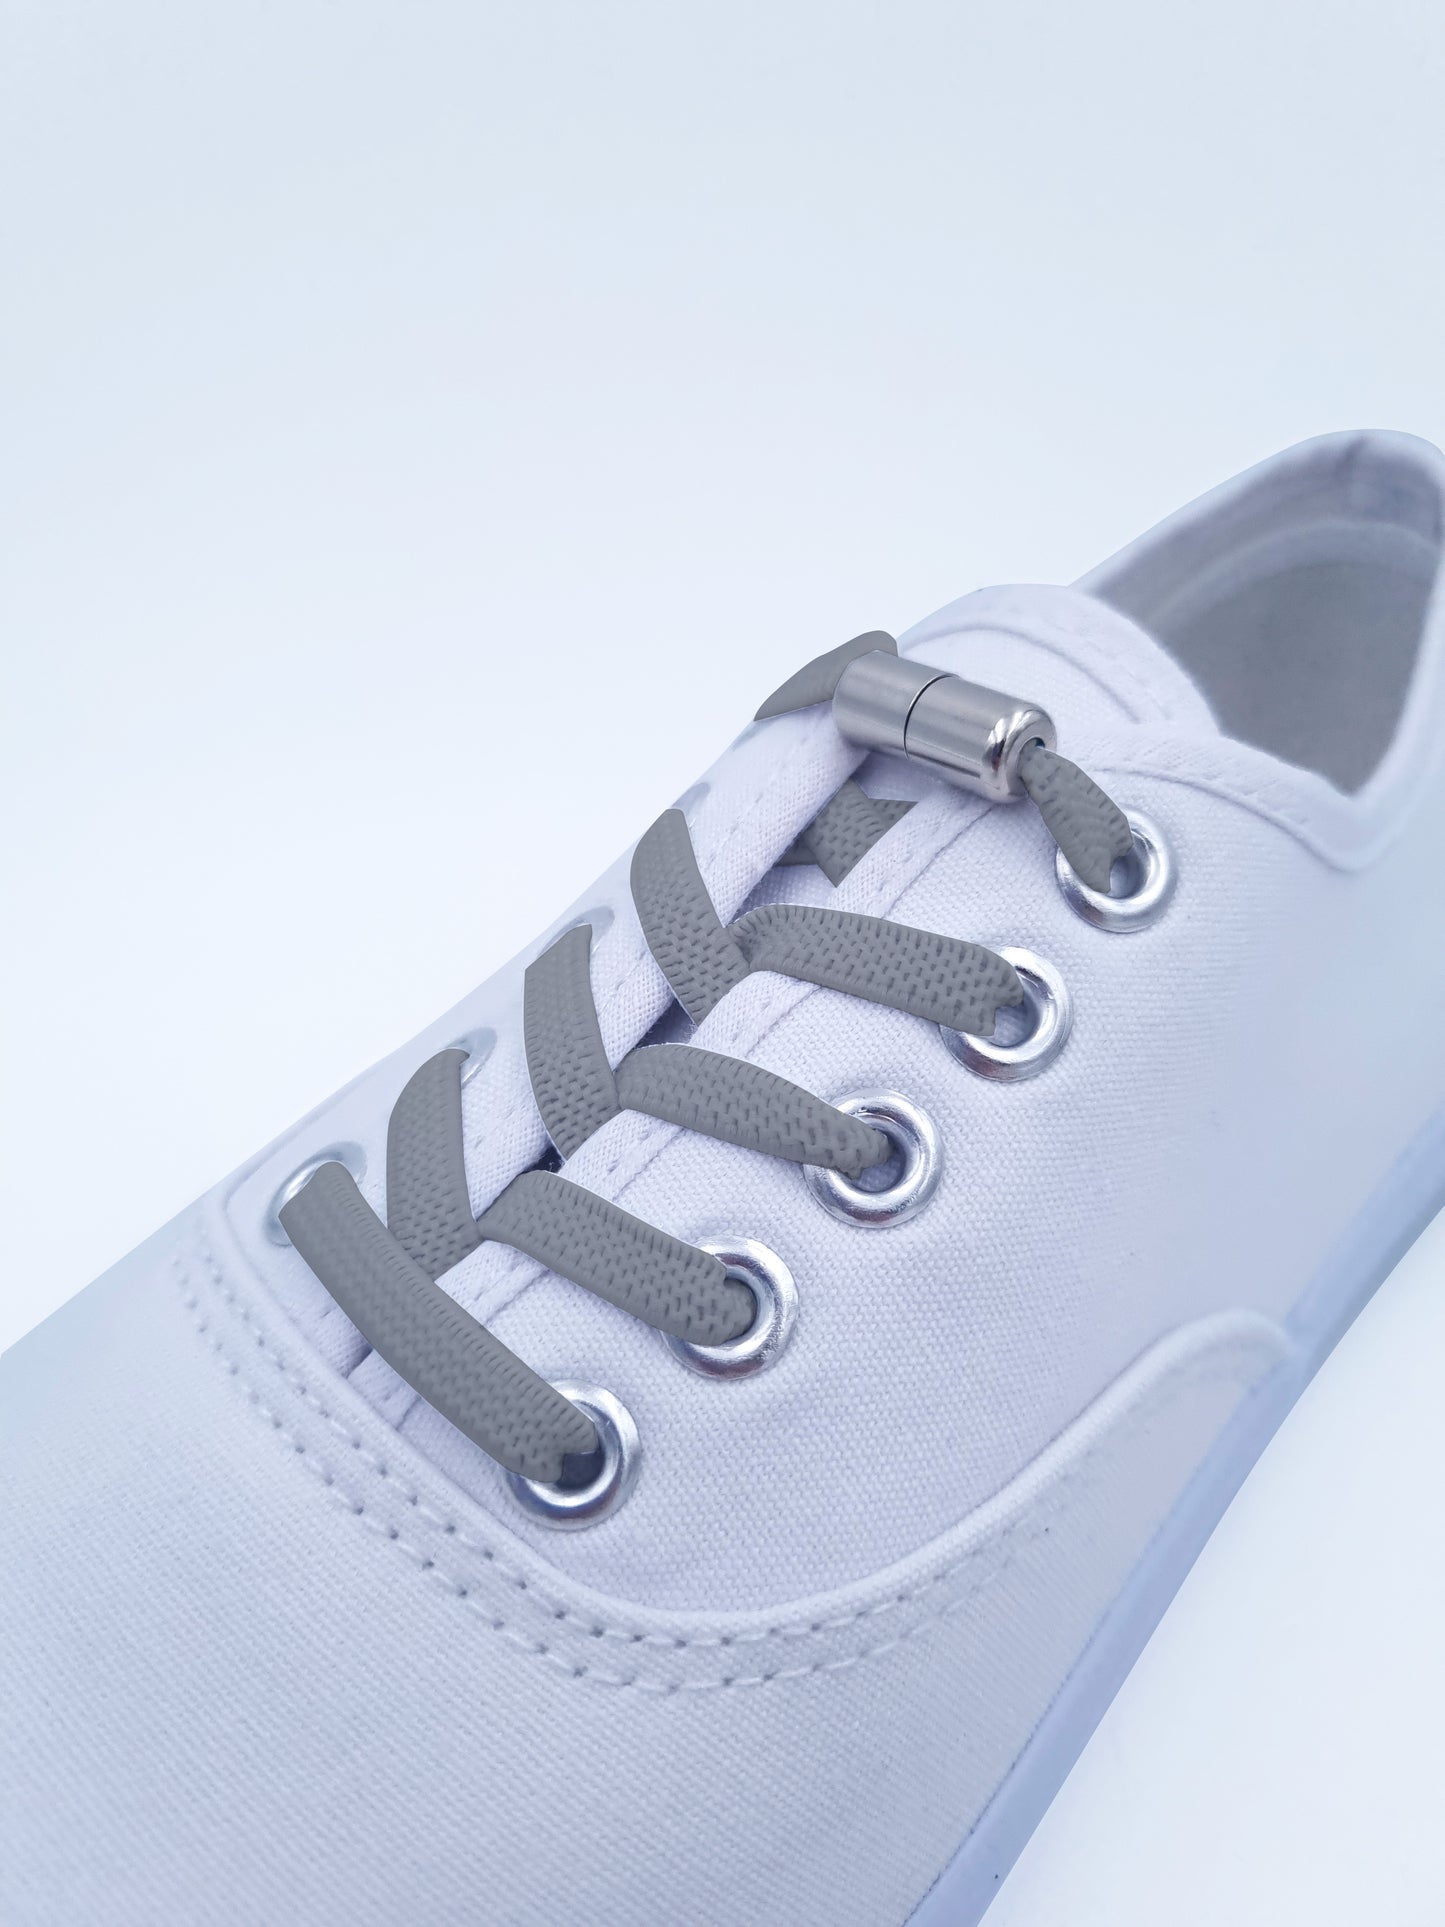 Elastic laces, light gray, 5 mm